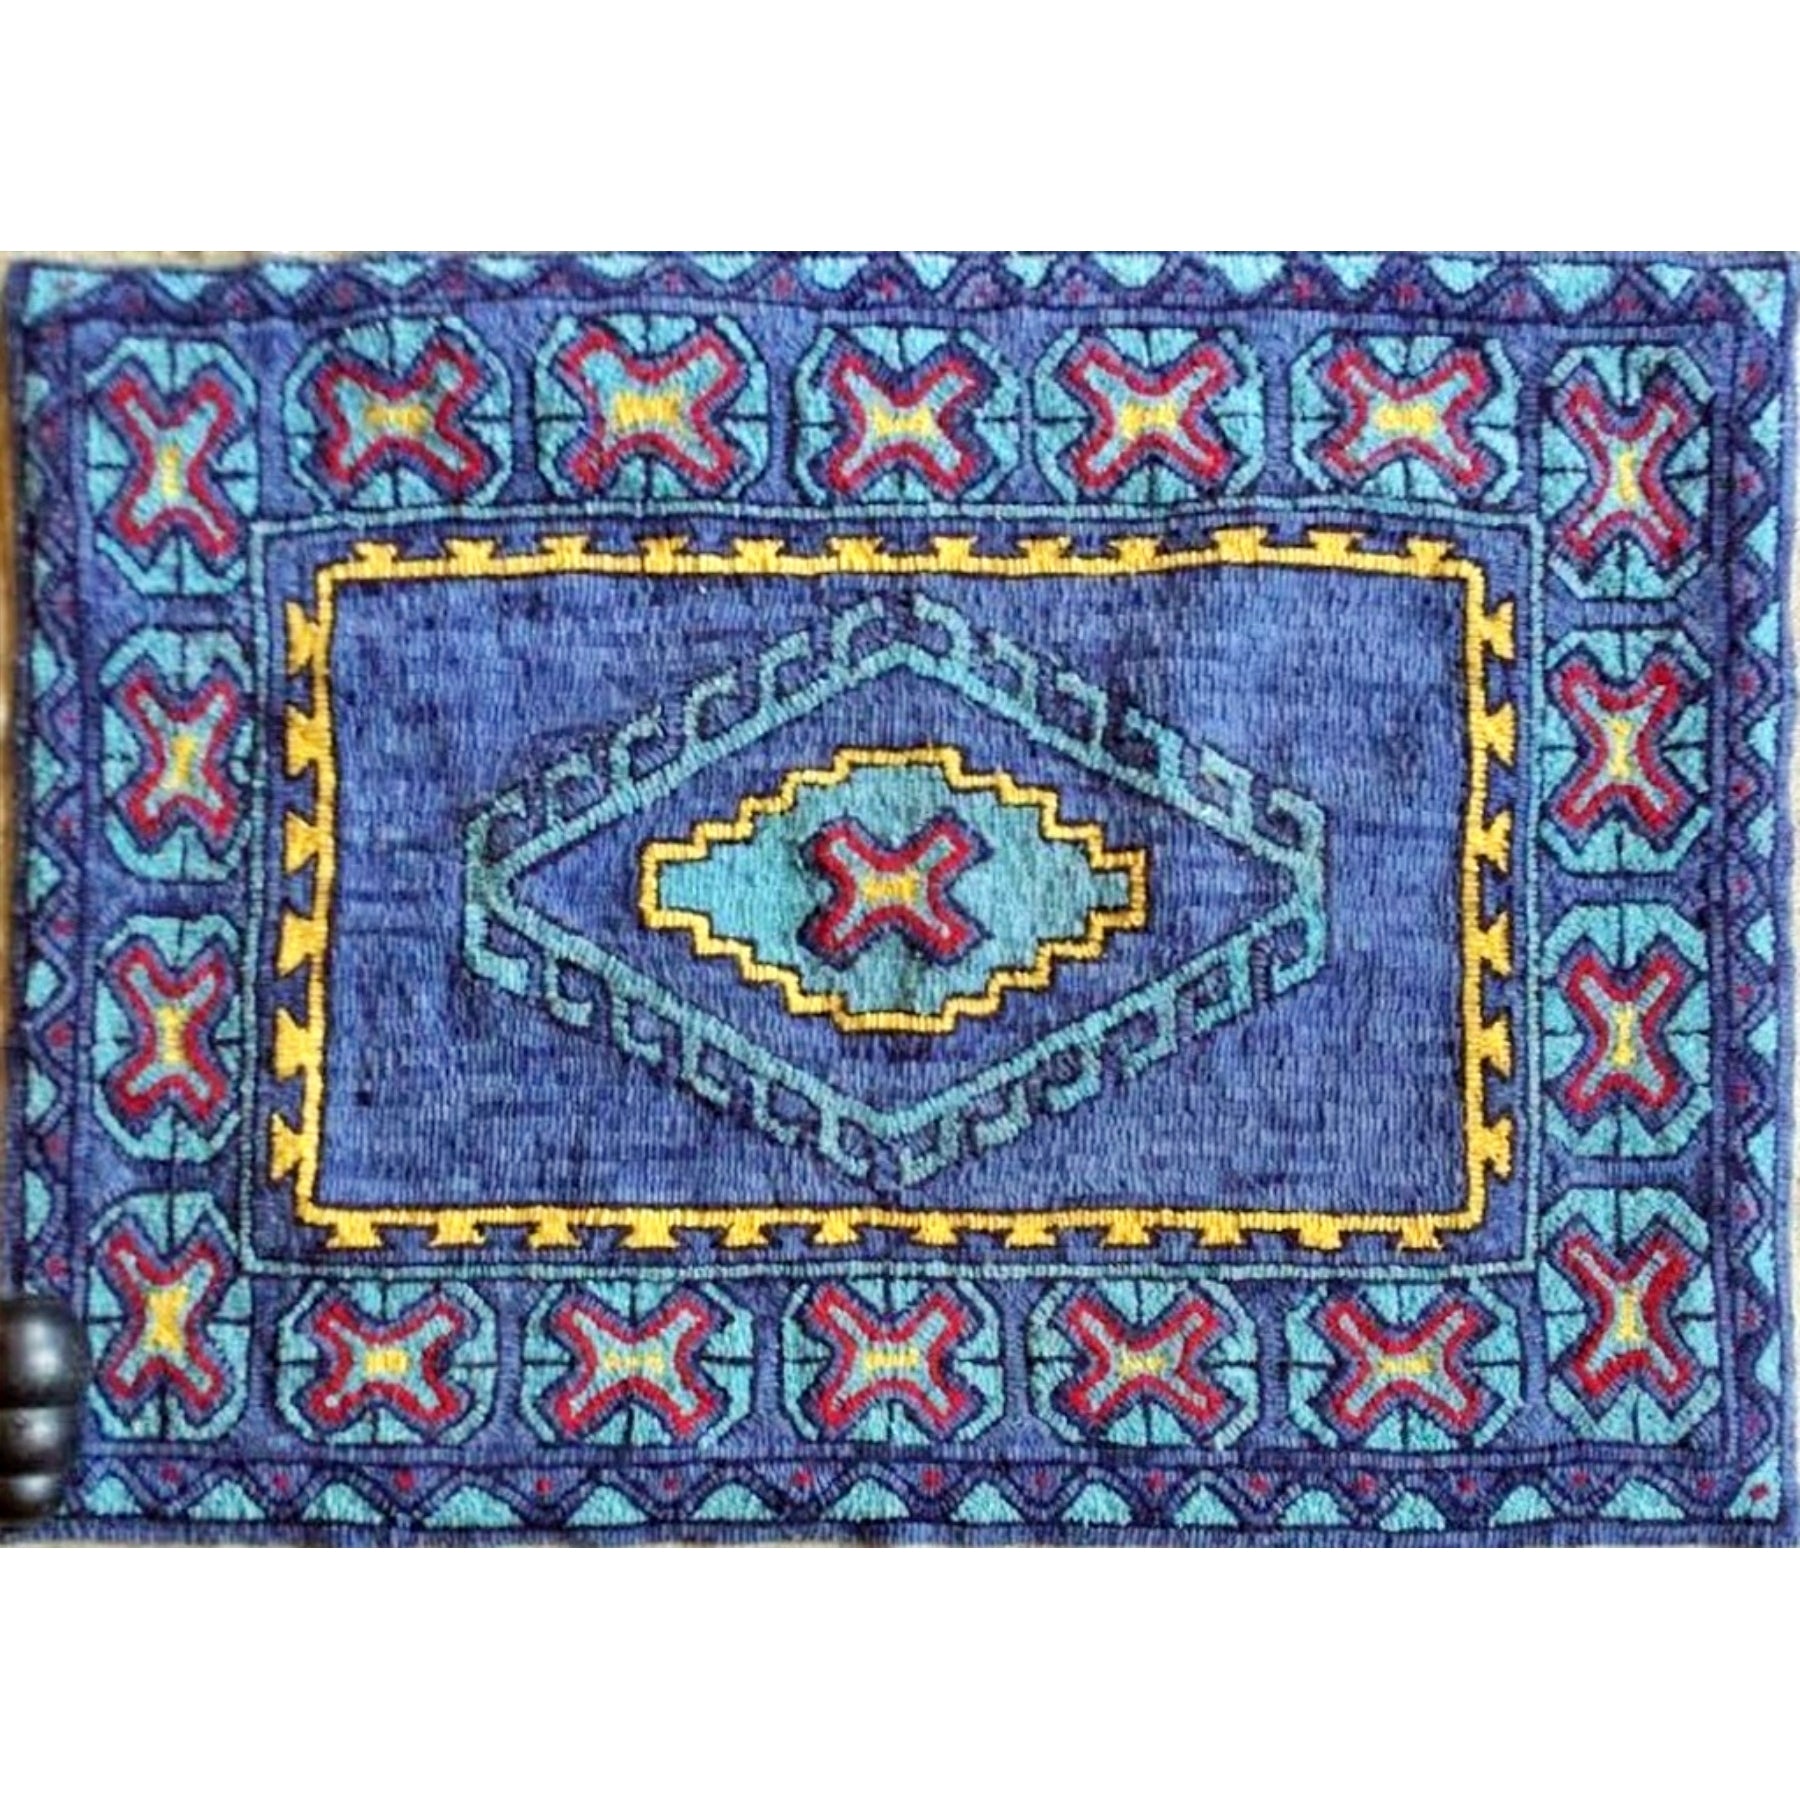 Yuruk, rug hooked by Missy Mackin